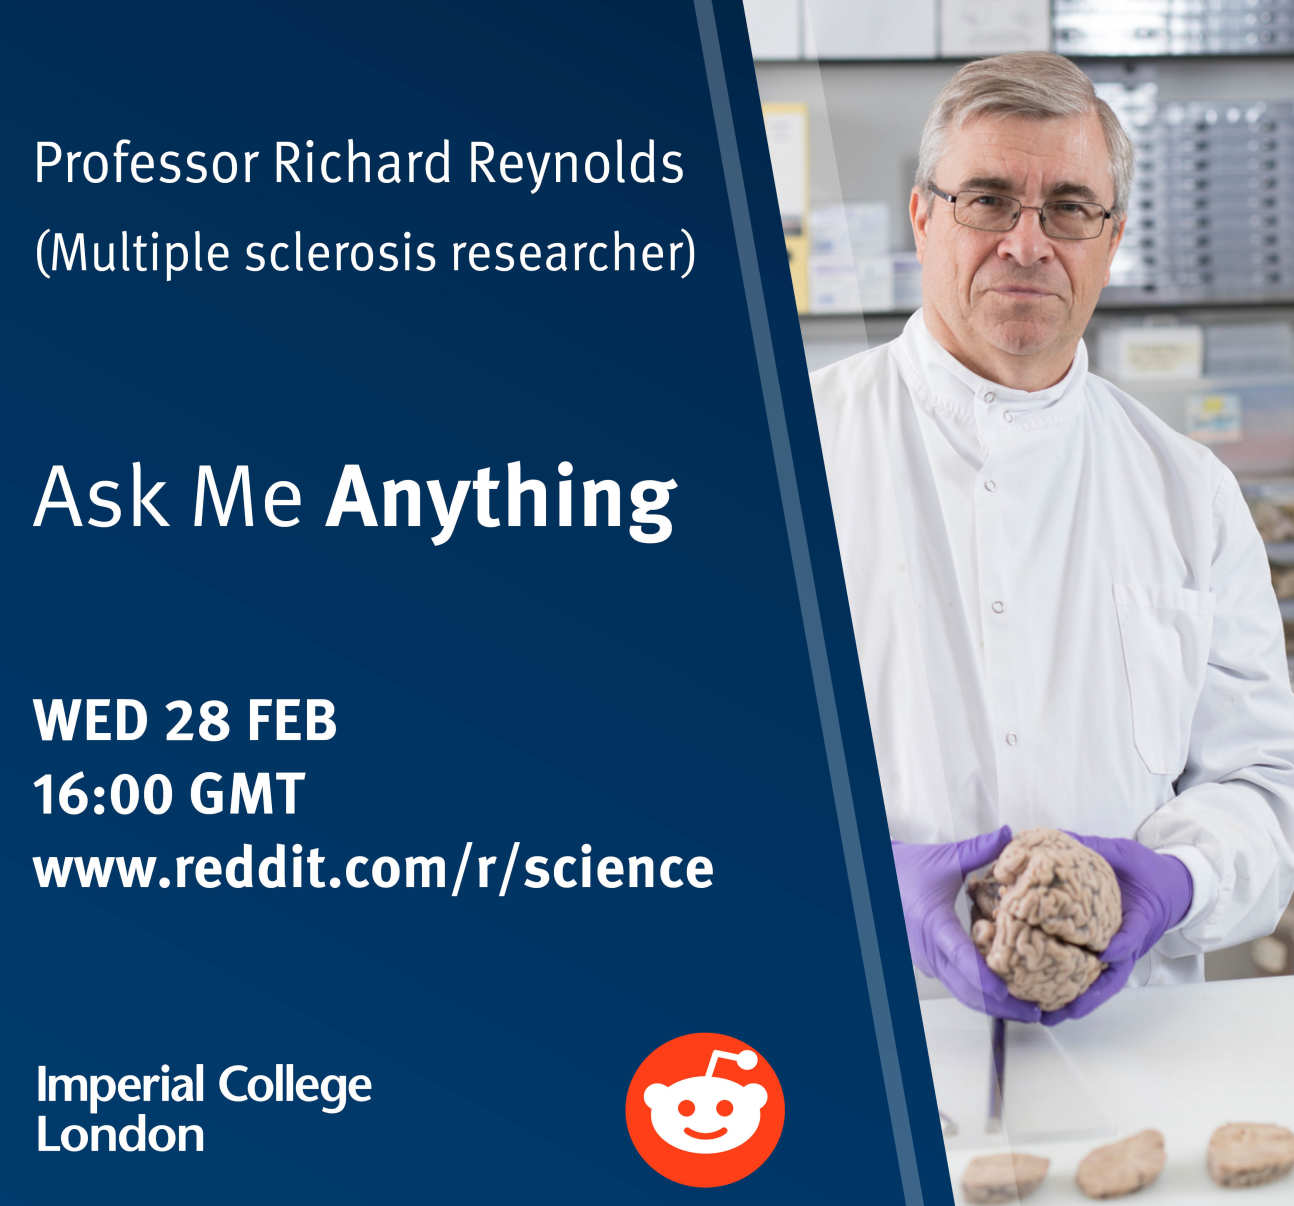 A poster publicising Professor Reynolds's live Q&A session